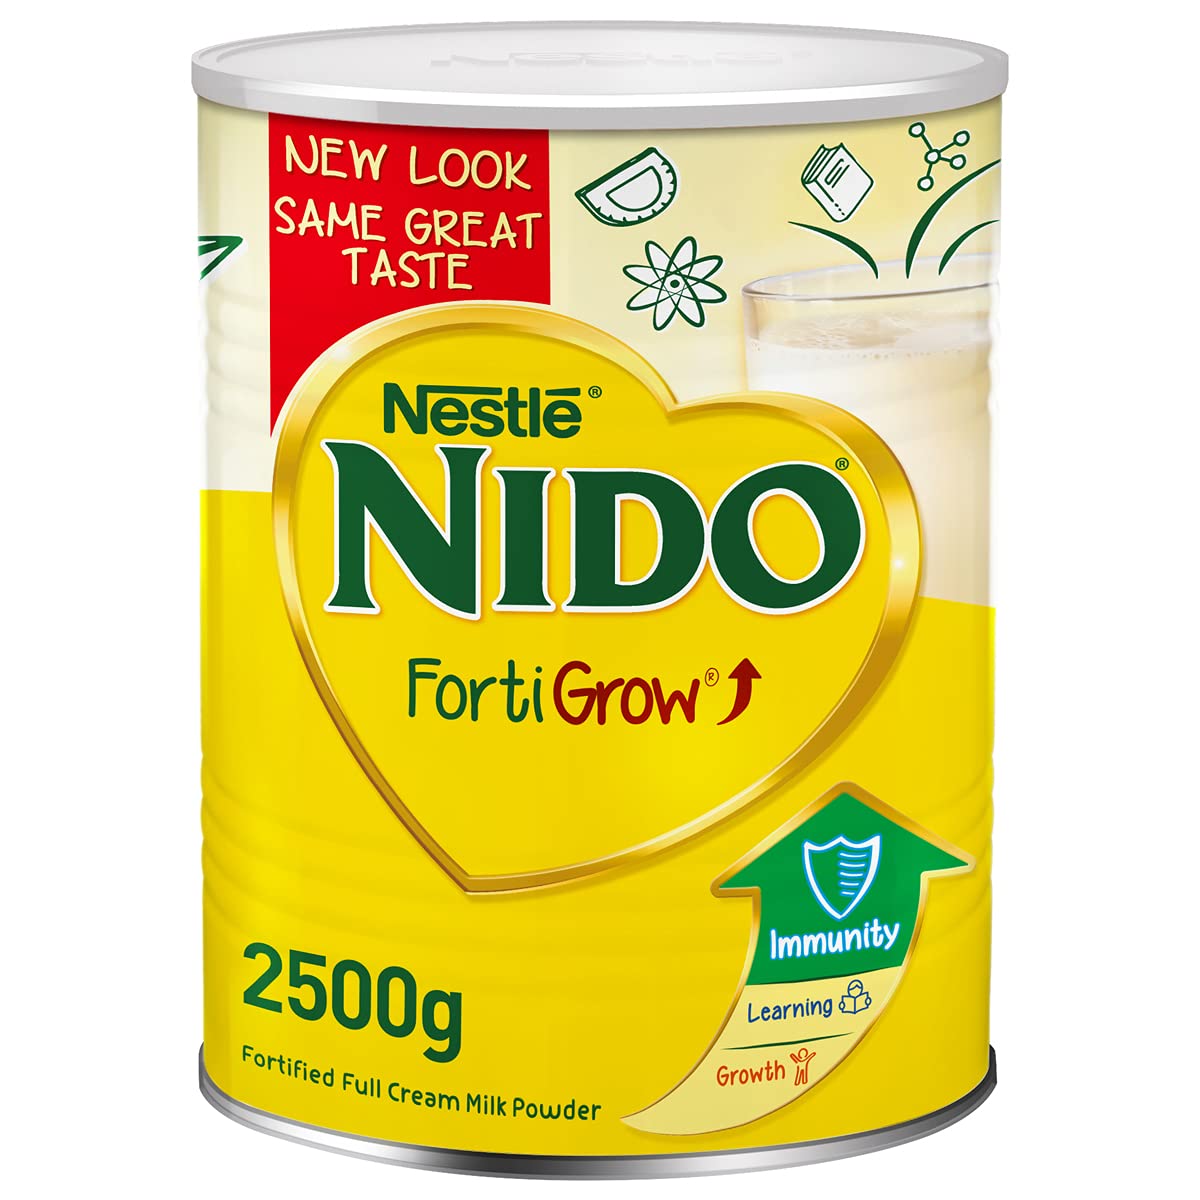 Buy Nido Forti,Grow Milk Powdern Fortified Full Cream Milk Powder